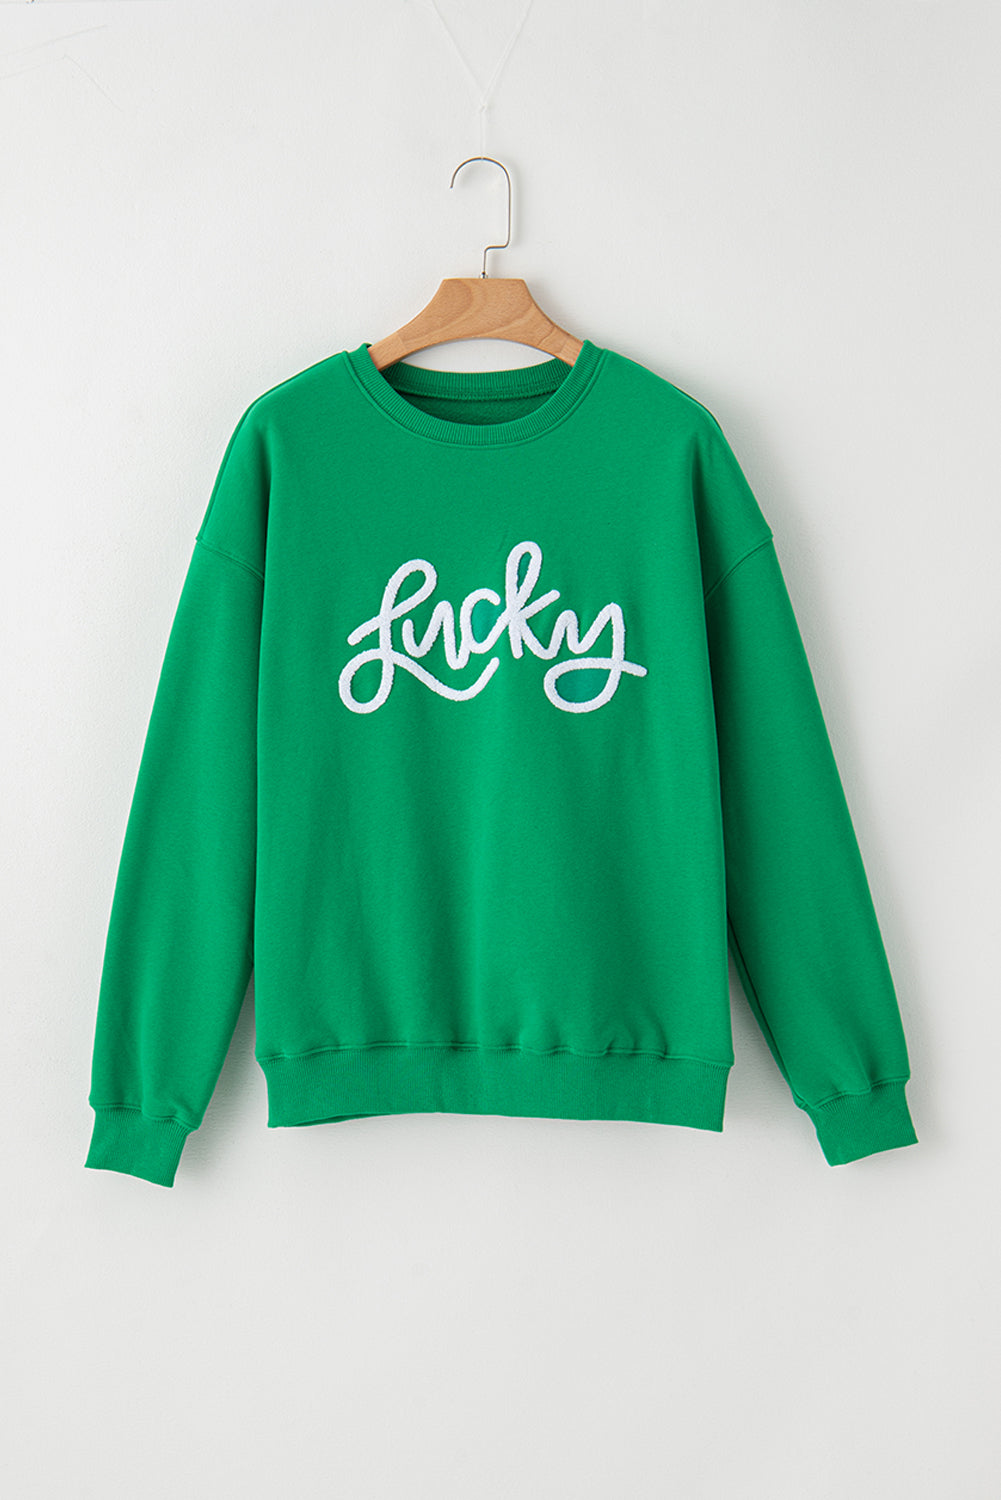 Grünes LUCKY Aphabet Chenille besticktes Pullover-Sweatshirt